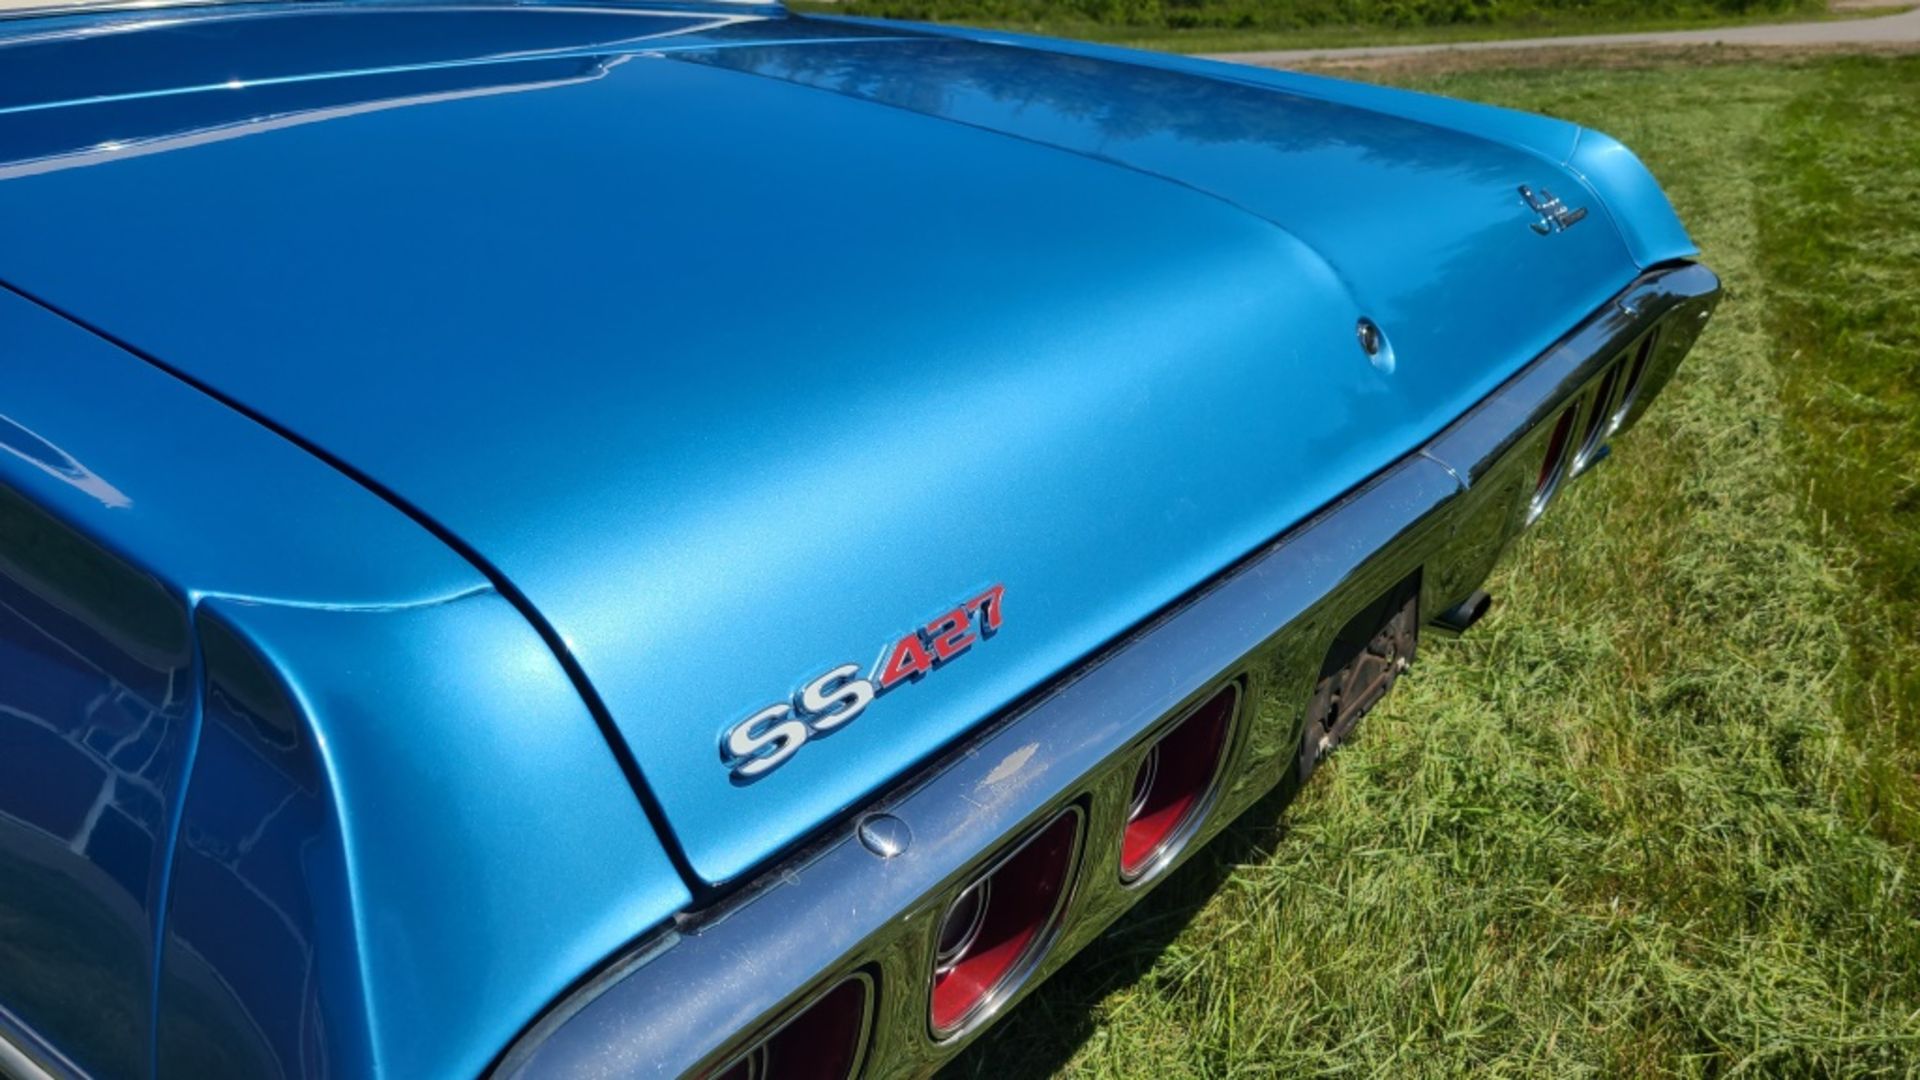 1968 Chevy Impala Ss - Image 8 of 15